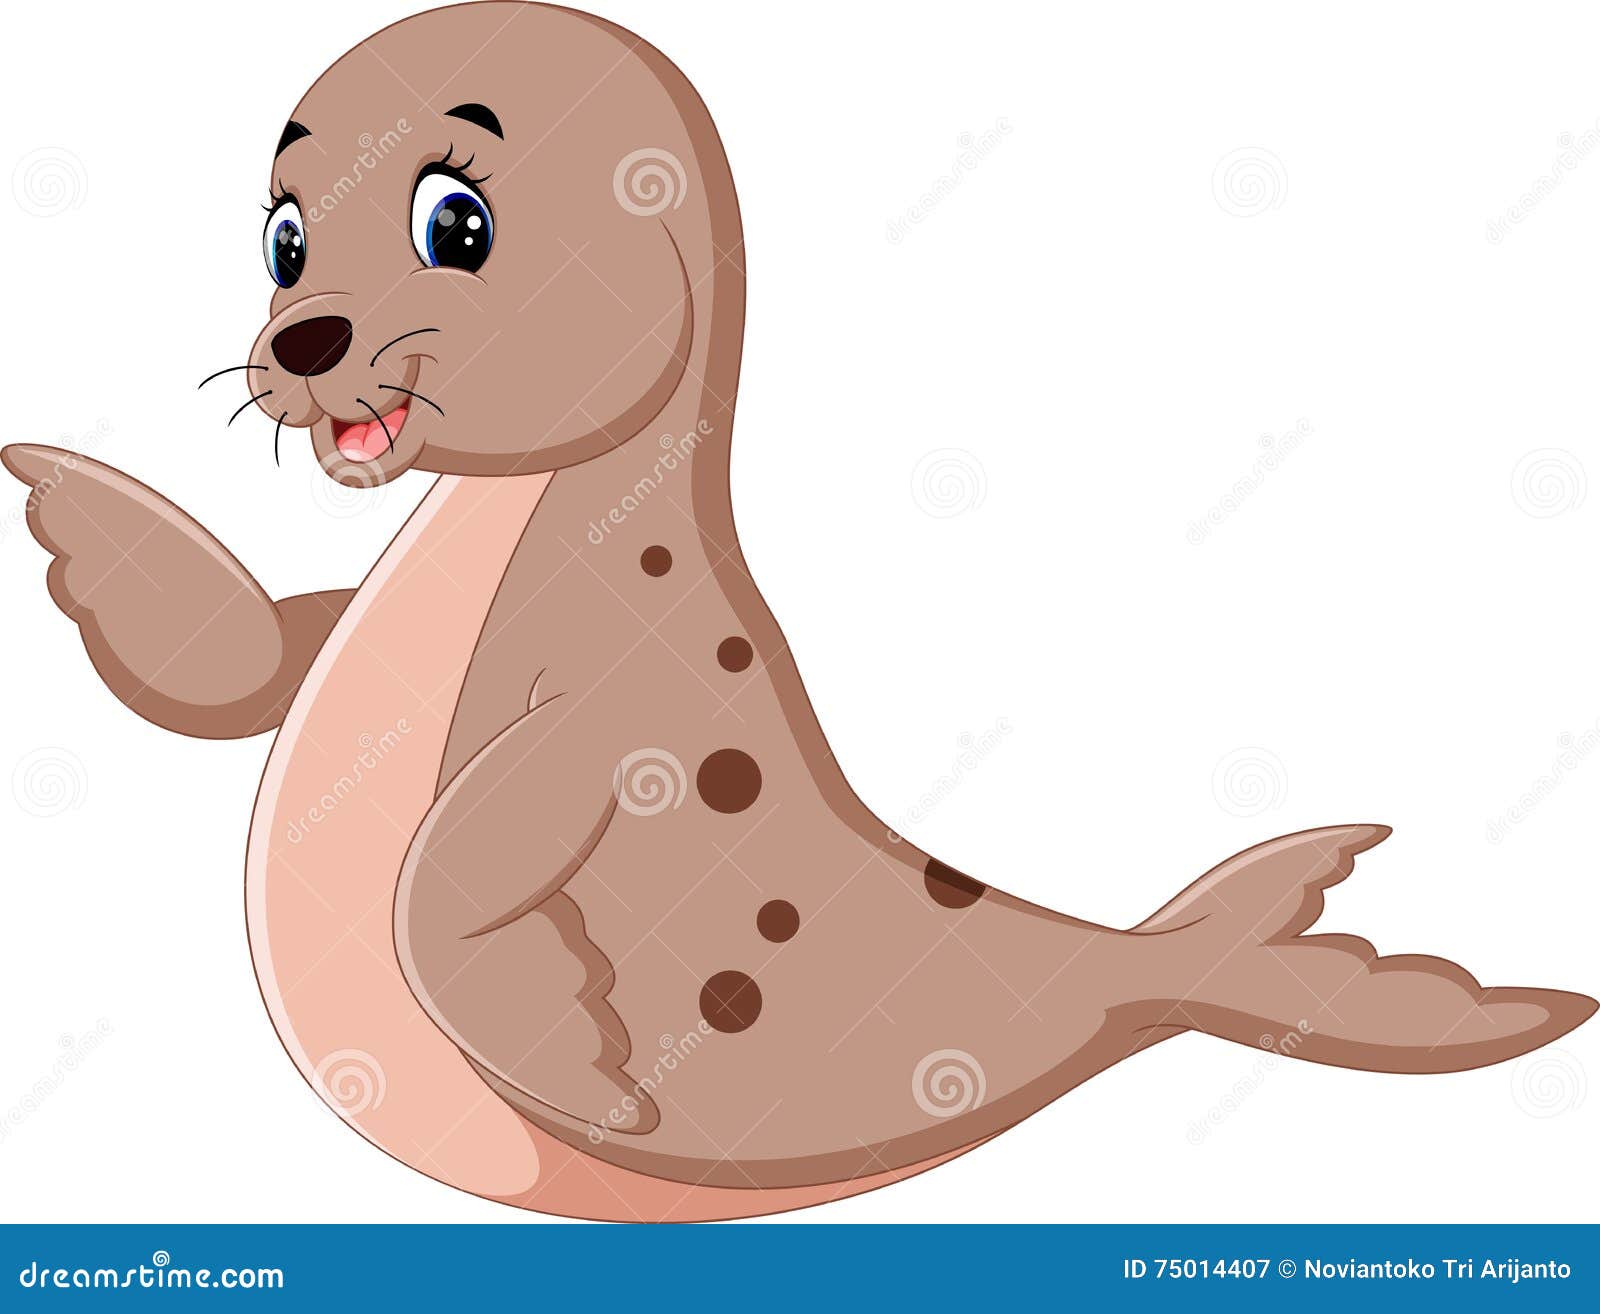 Cute seal cartoon stock vector. Illustration of animal - 75014407